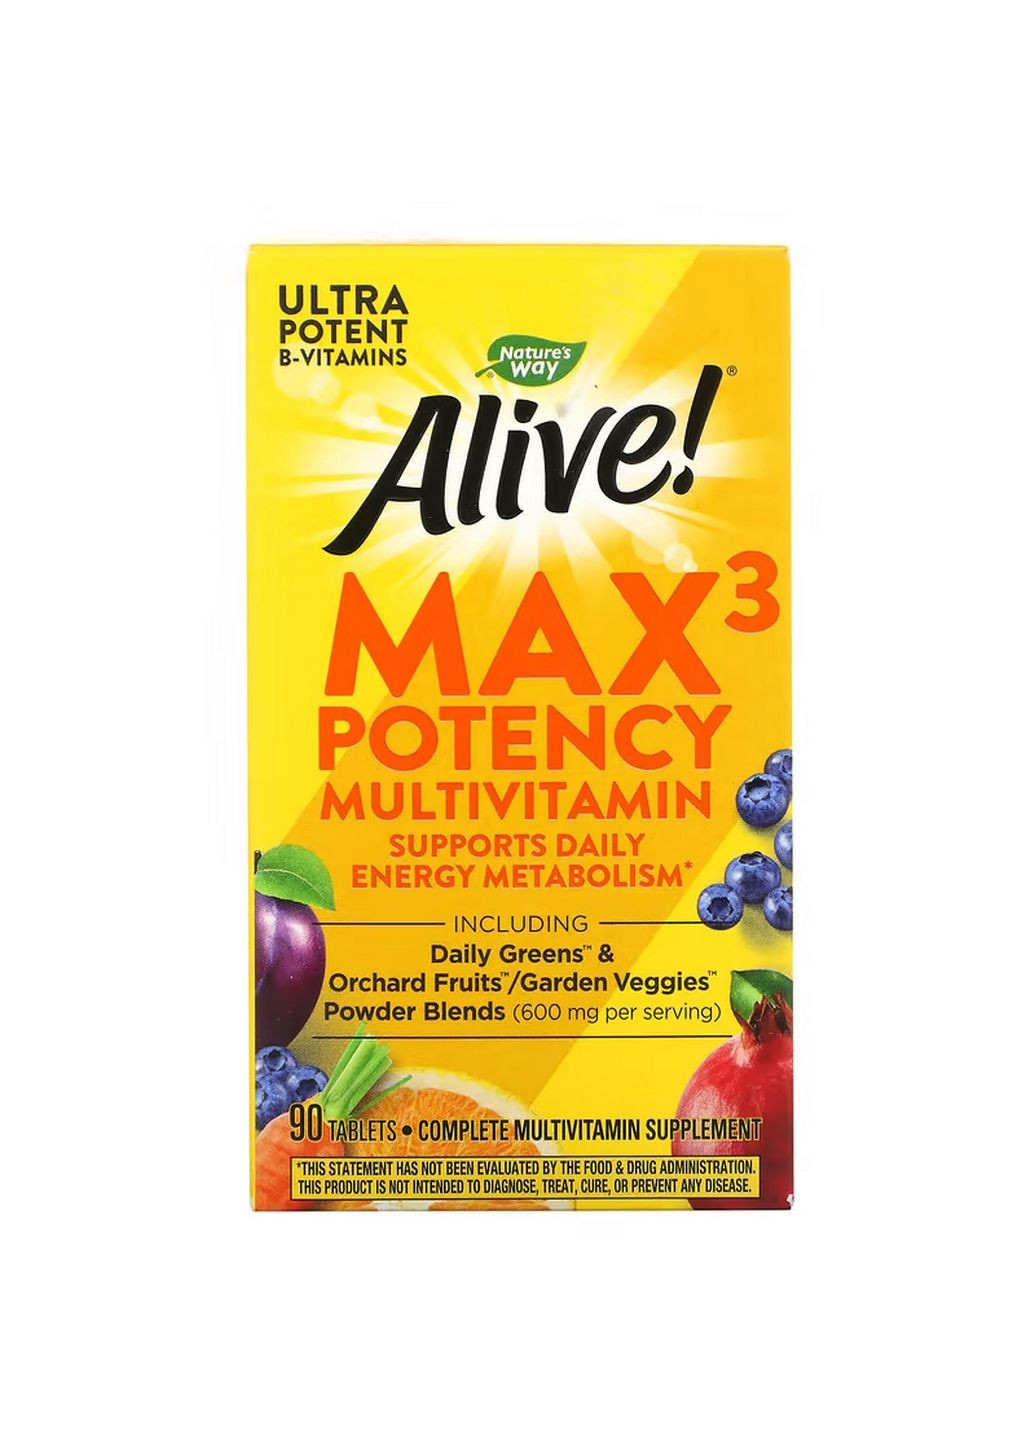 Витамины и минералы Alive! Max3 Potency Multivitamin, 90 таблеток Nature's Way (293477999)